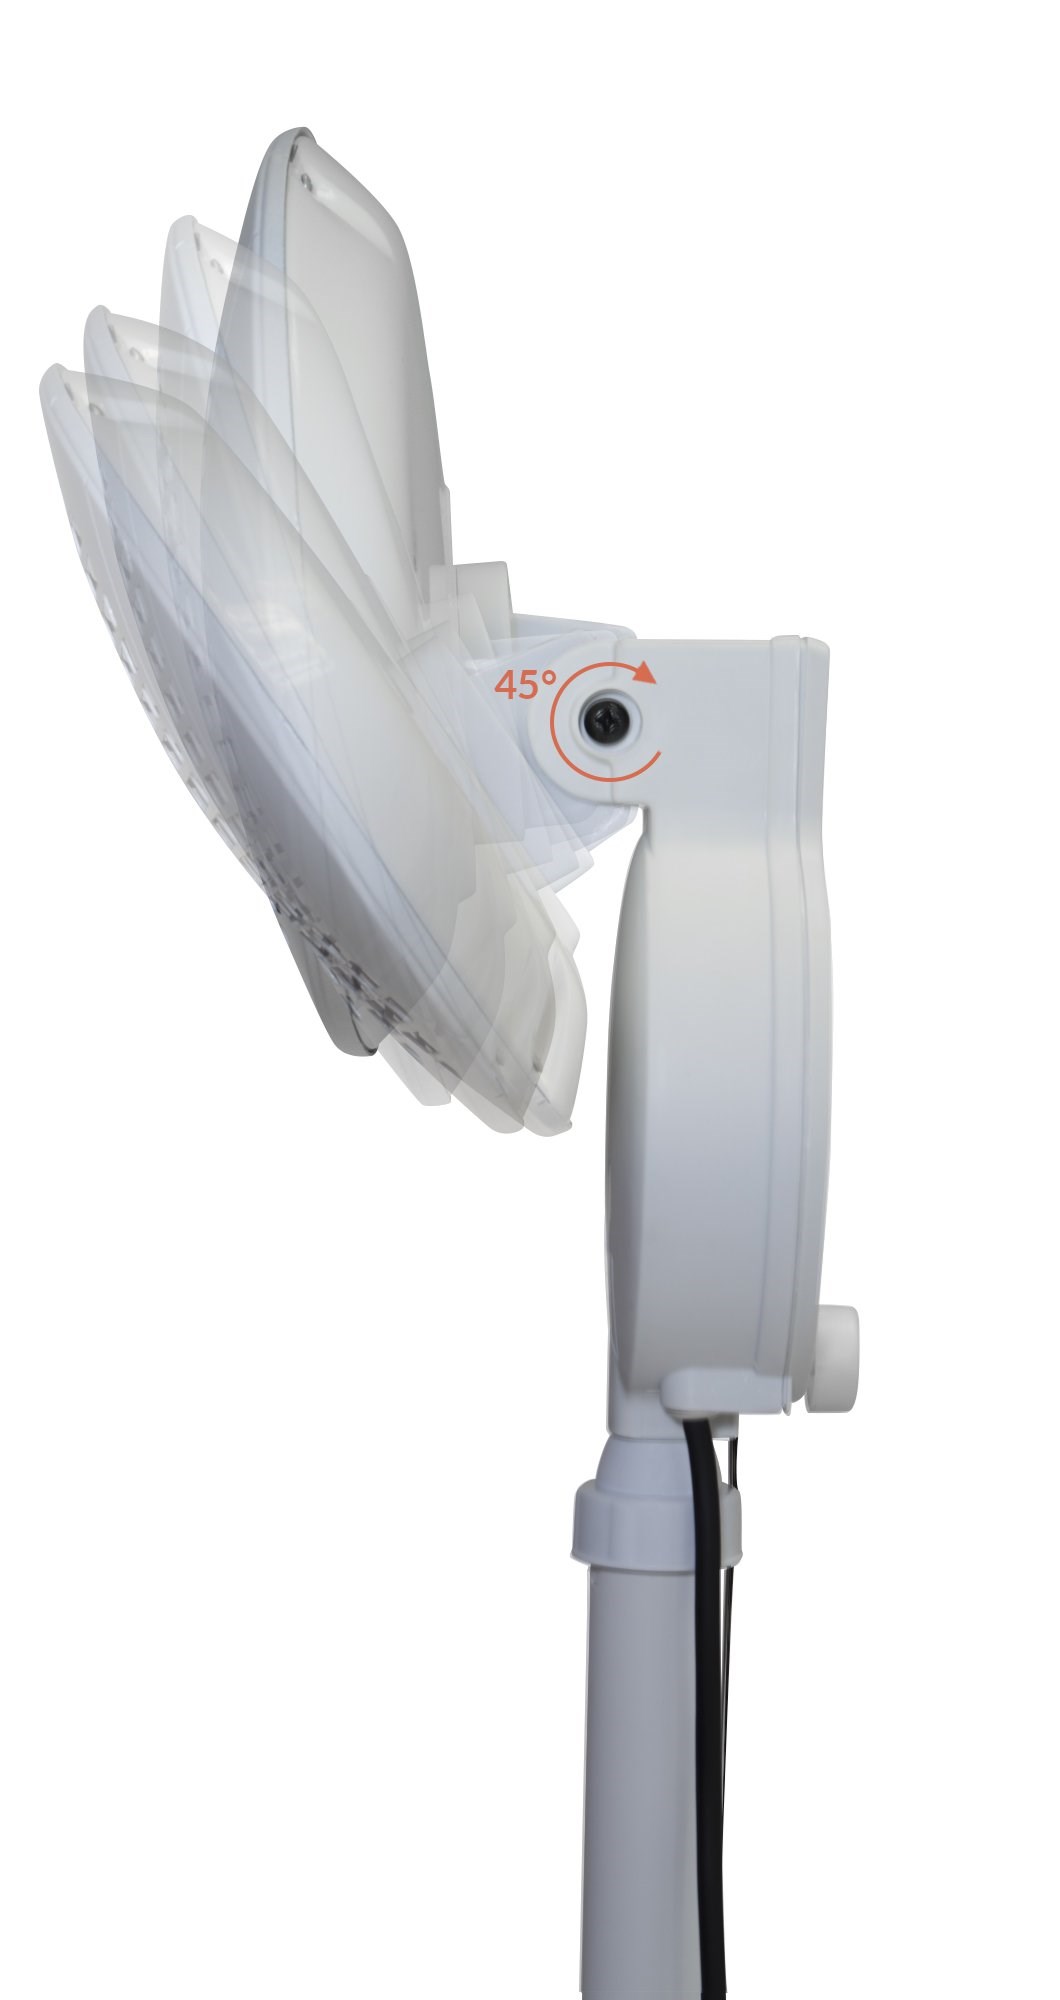 2kW IPX4 Freestanding Electric Quartz Bulb Patio Heater in White | Heatlab®